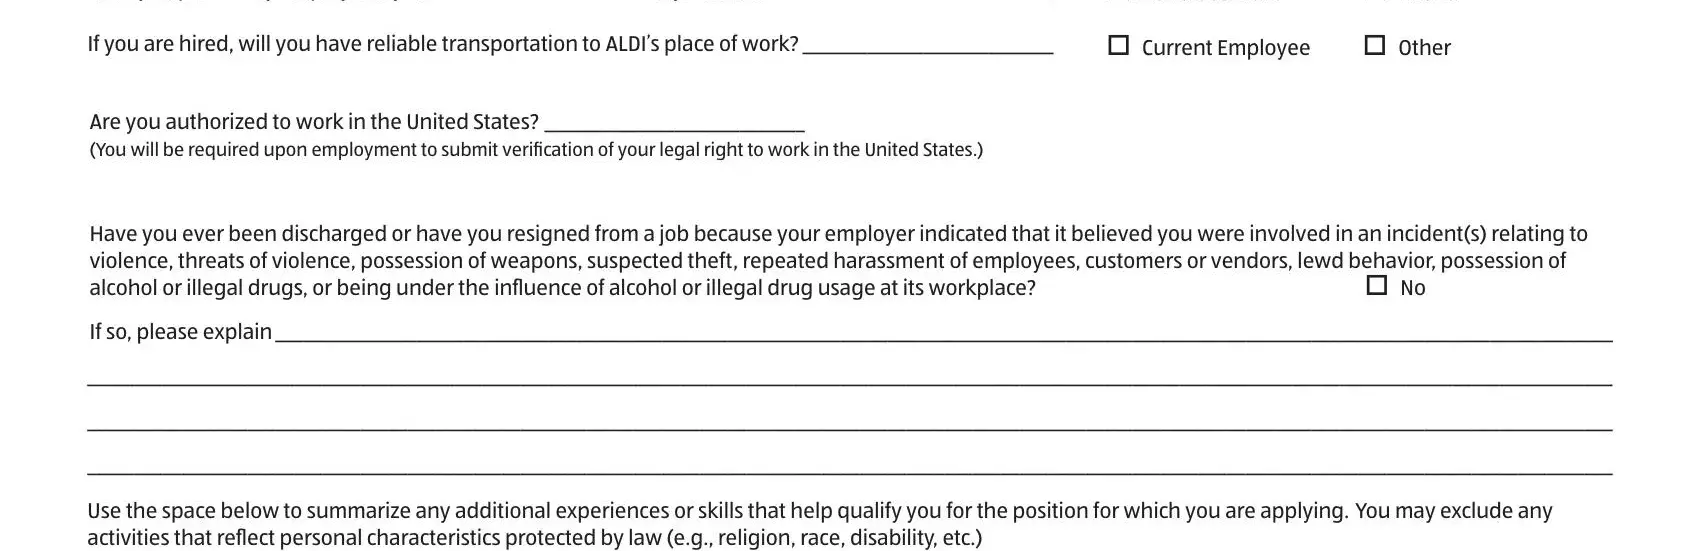 Filling in aldi employment application form online part 2